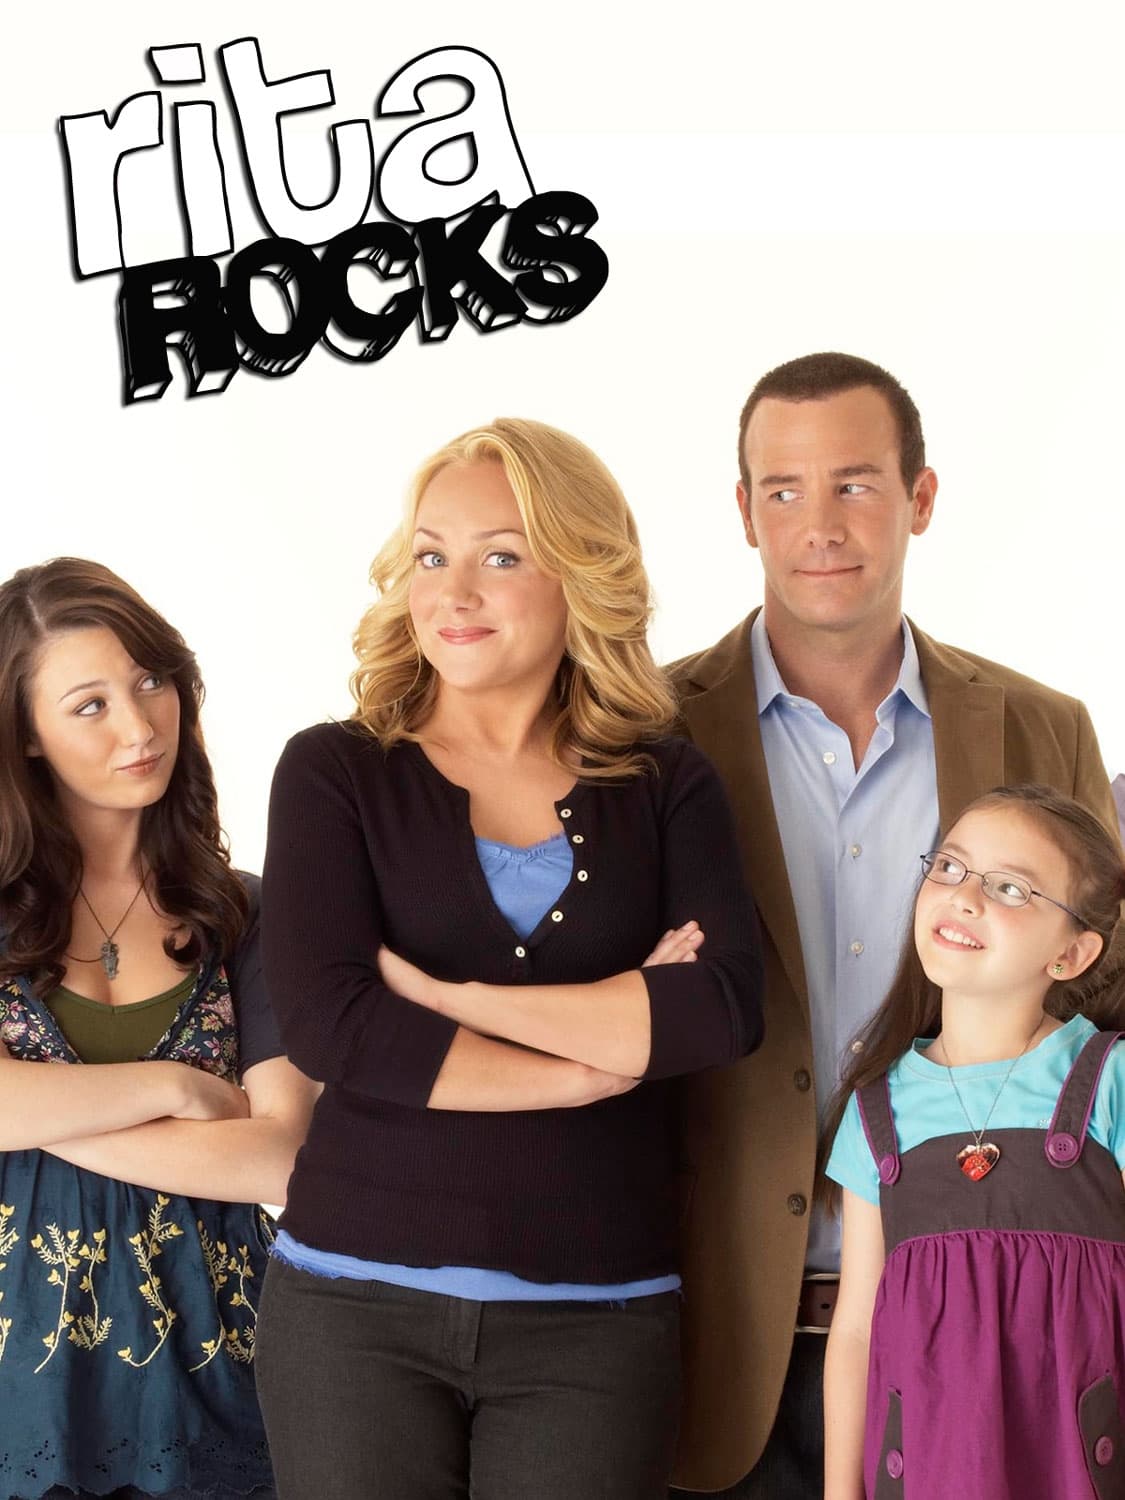 Rita Rocks (2008)